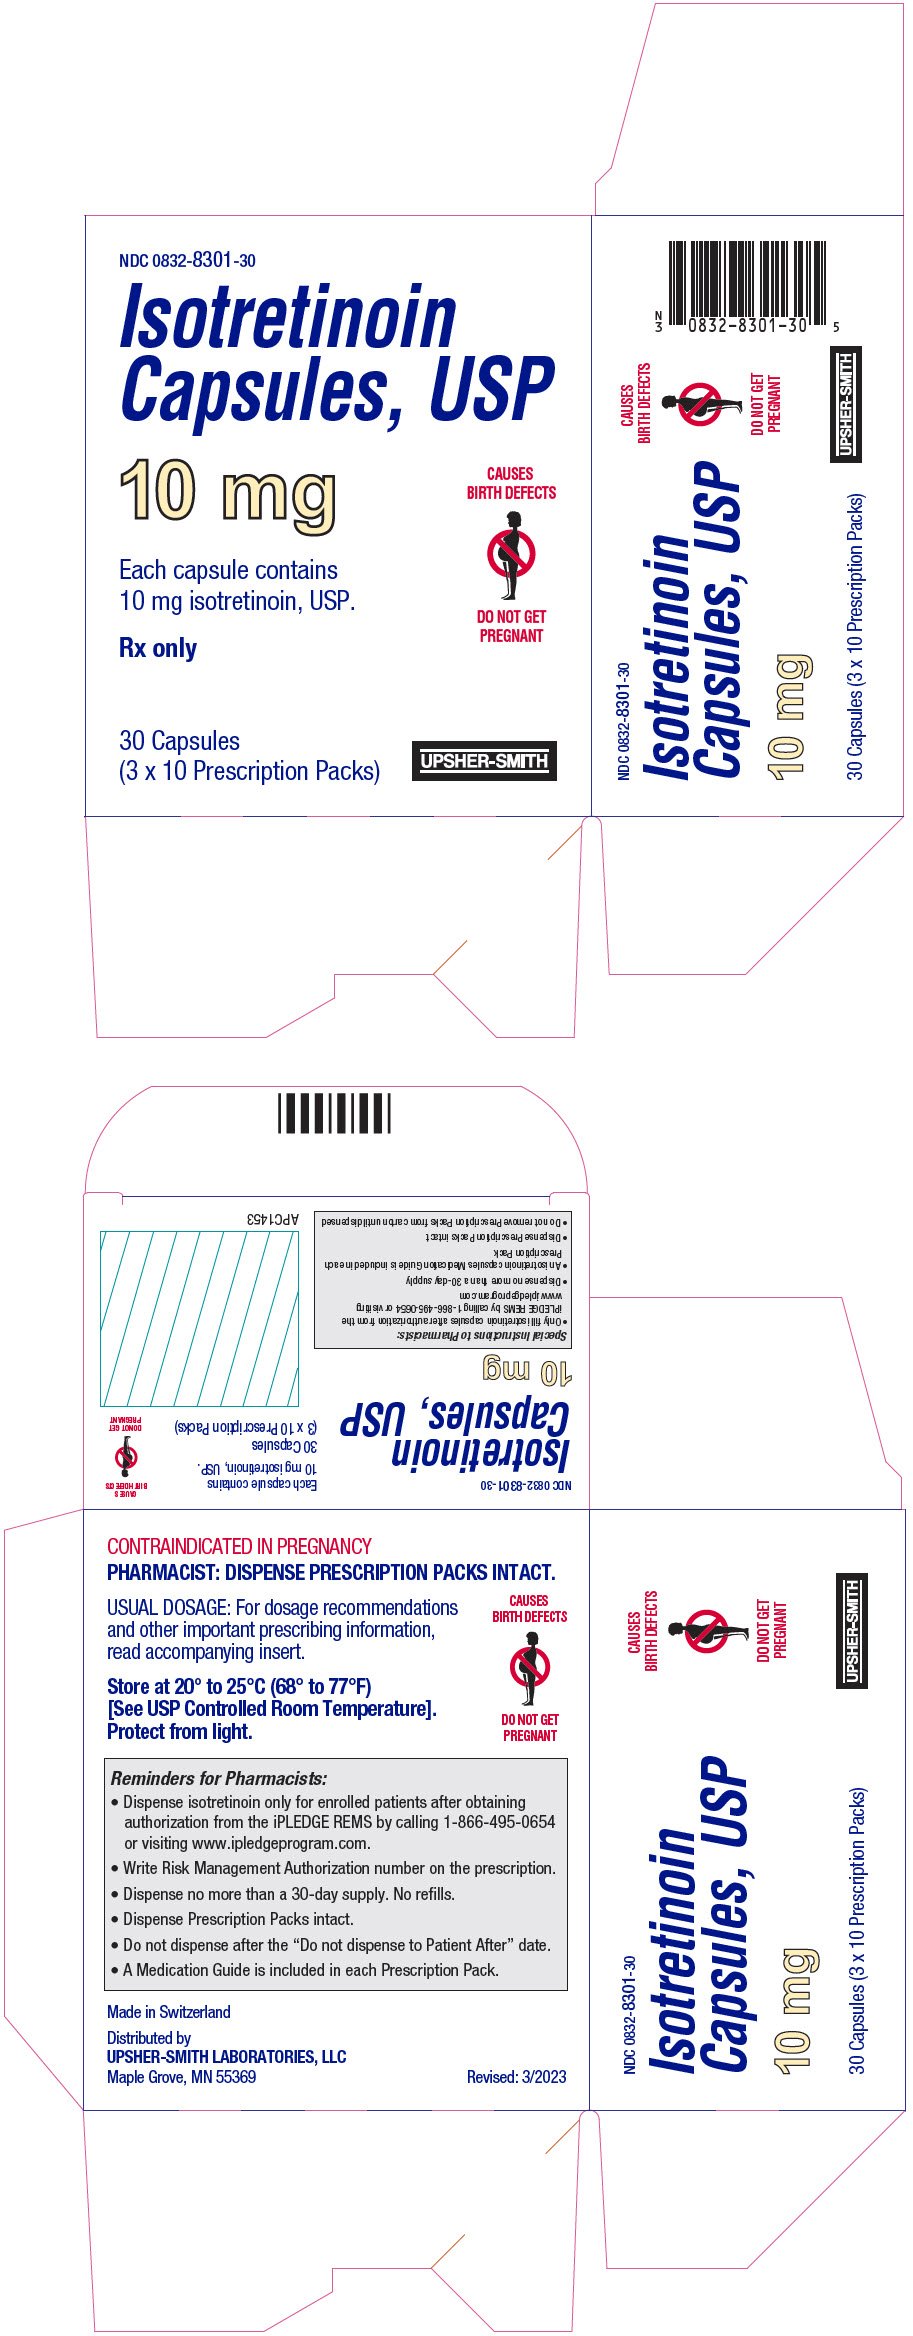 PRINCIPAL DISPLAY PANEL - 10 mg Blister Pack Box